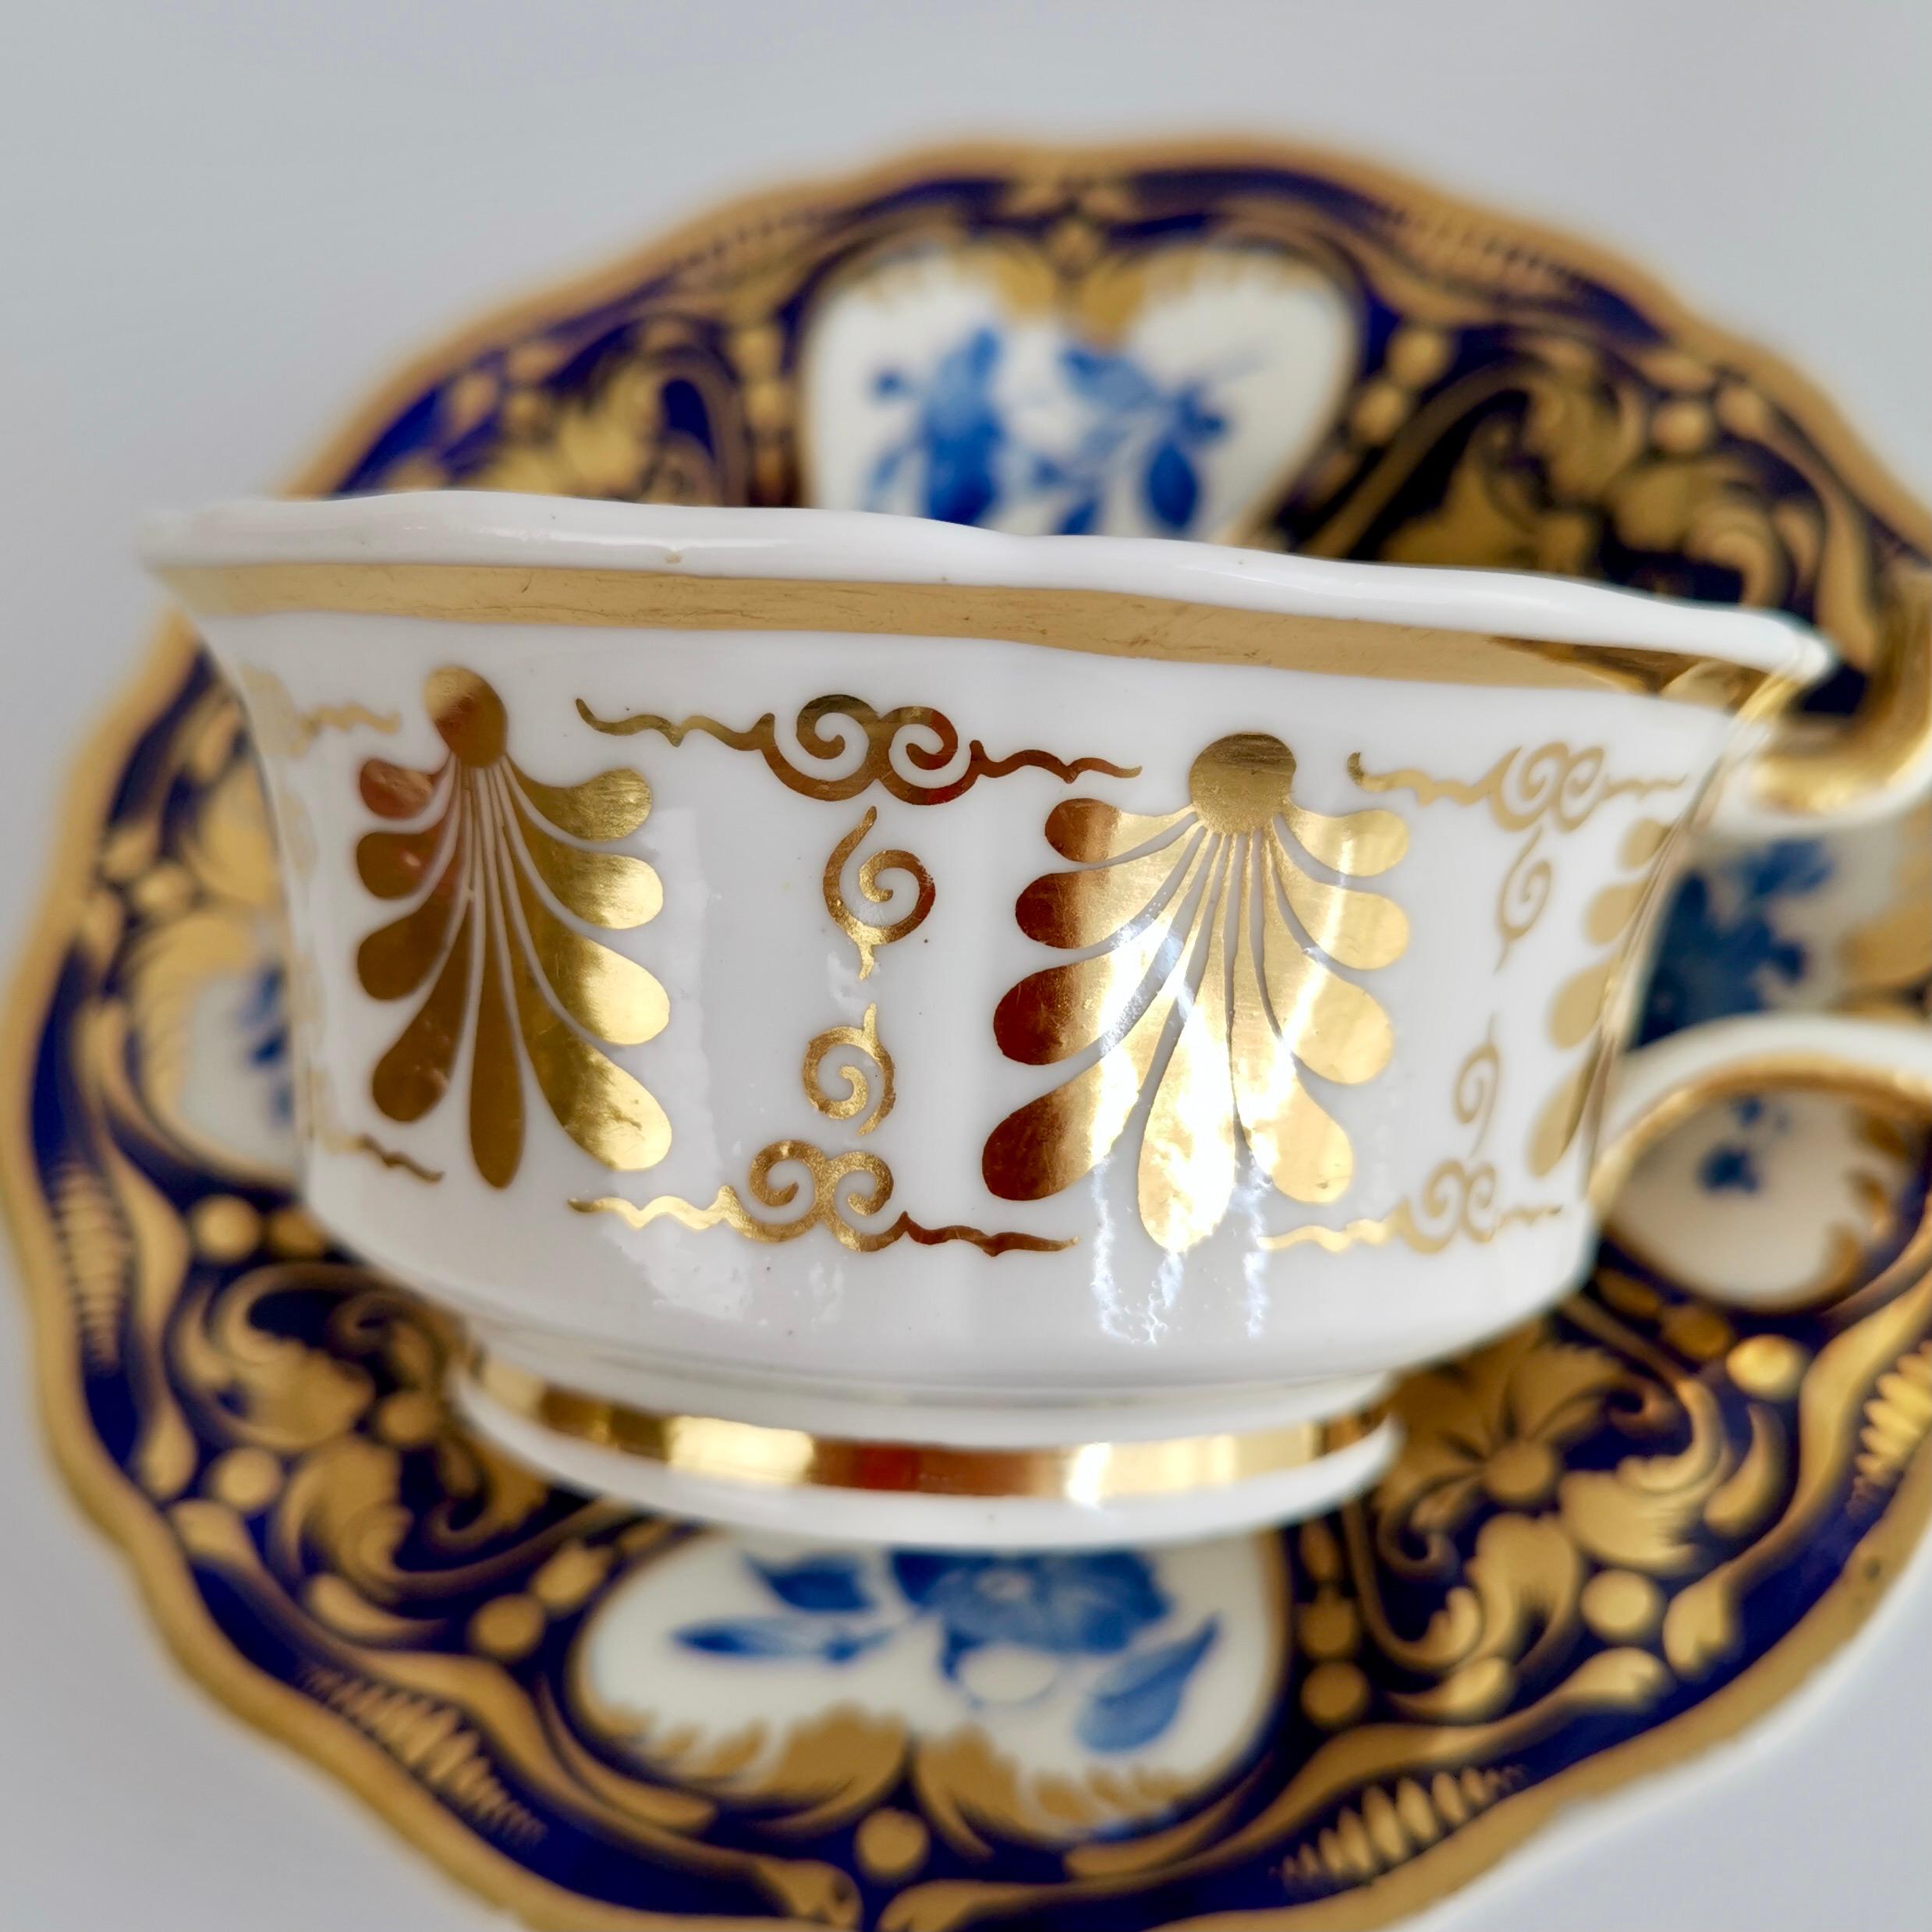 Porcelain Ridgway Teacup and Saucer, Blue and Gilt, Flowers Patt. 2/1000, Regency ca 1825